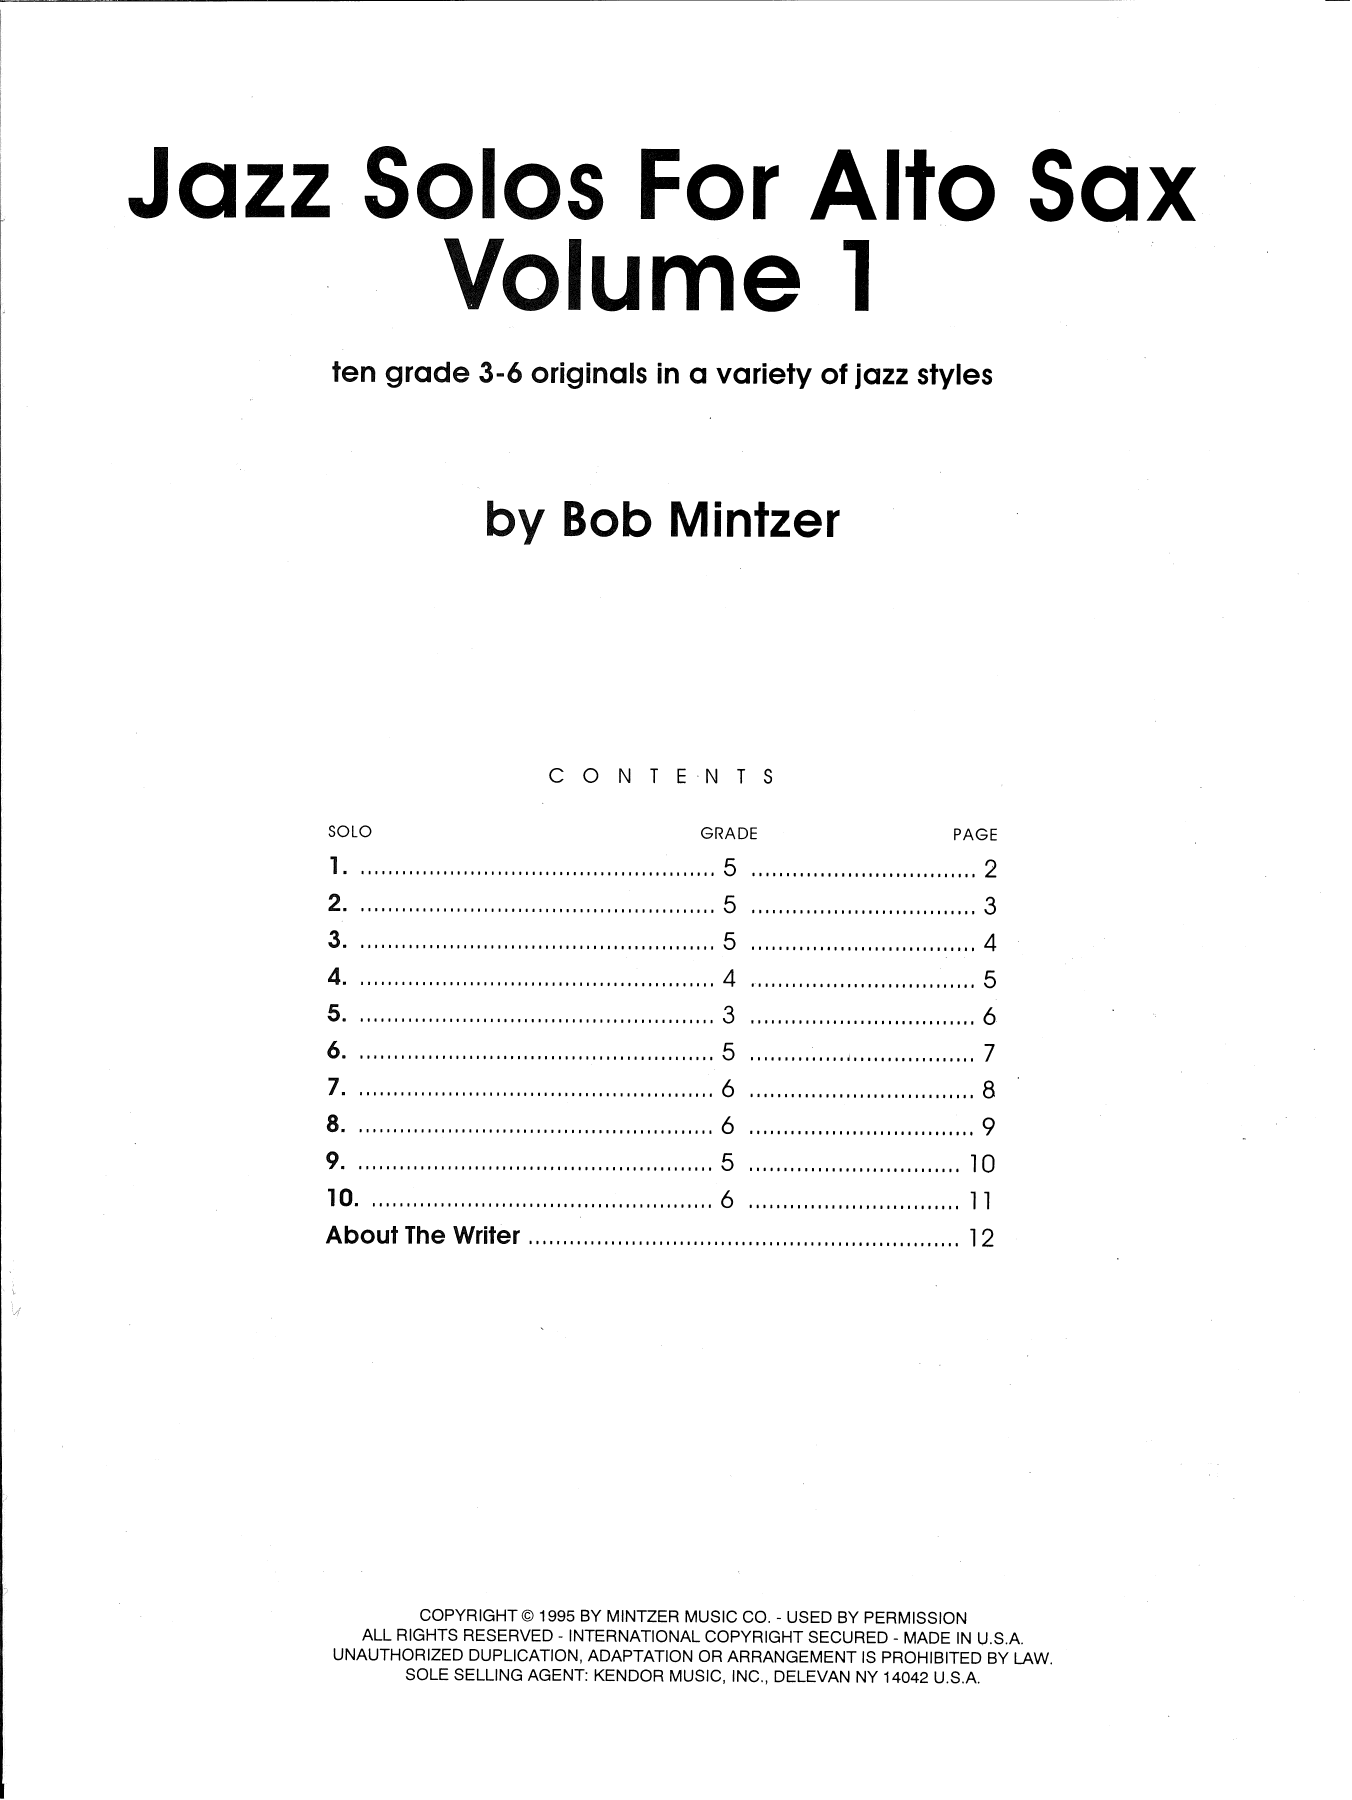 Download Bob Mintzer Jazz Solos For Alto Sax, Volume 1 Sheet Music